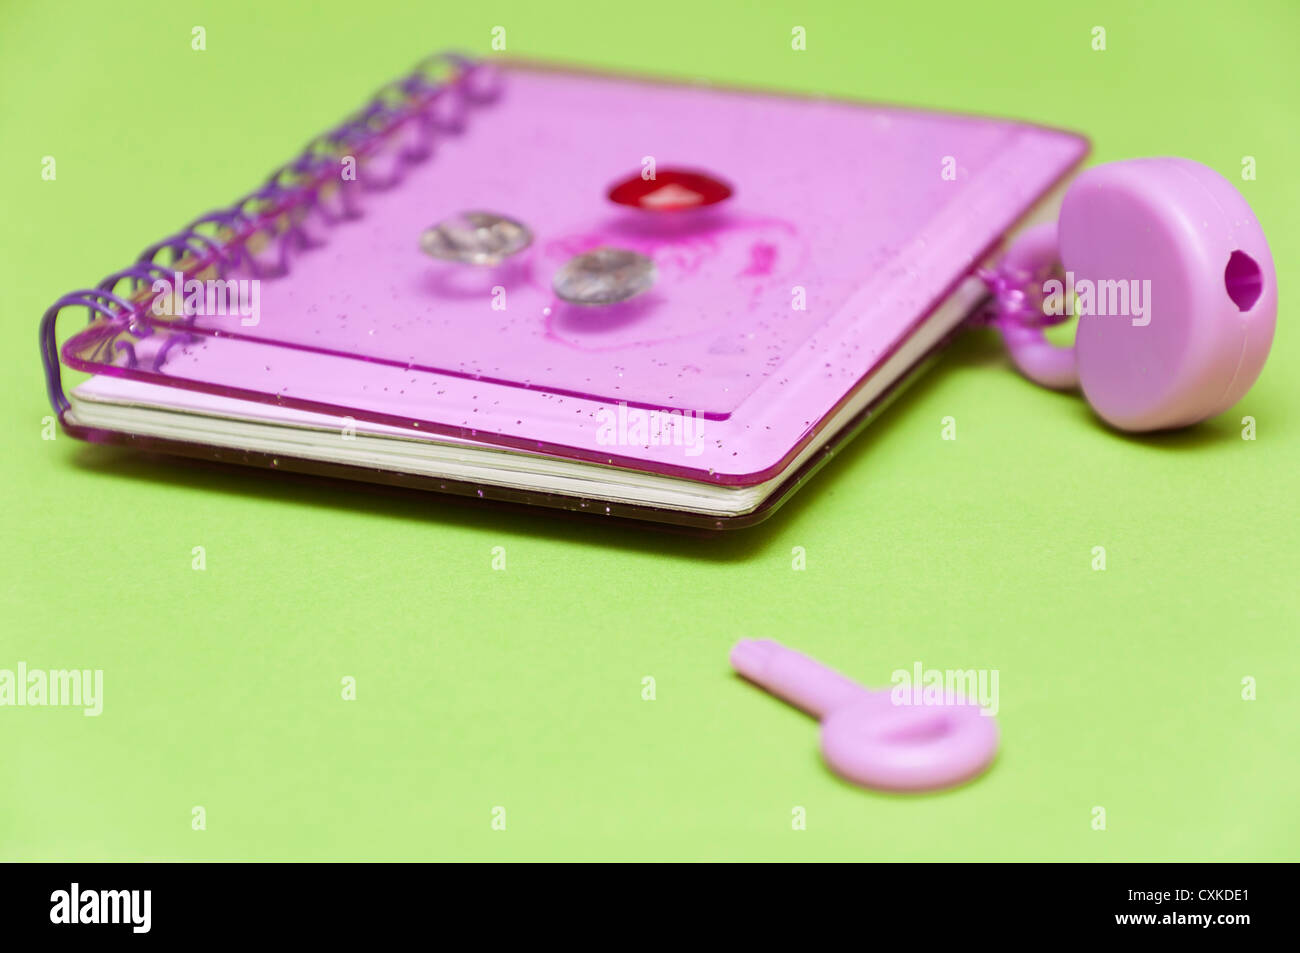 Cild's pink secret diary. Stock Photo